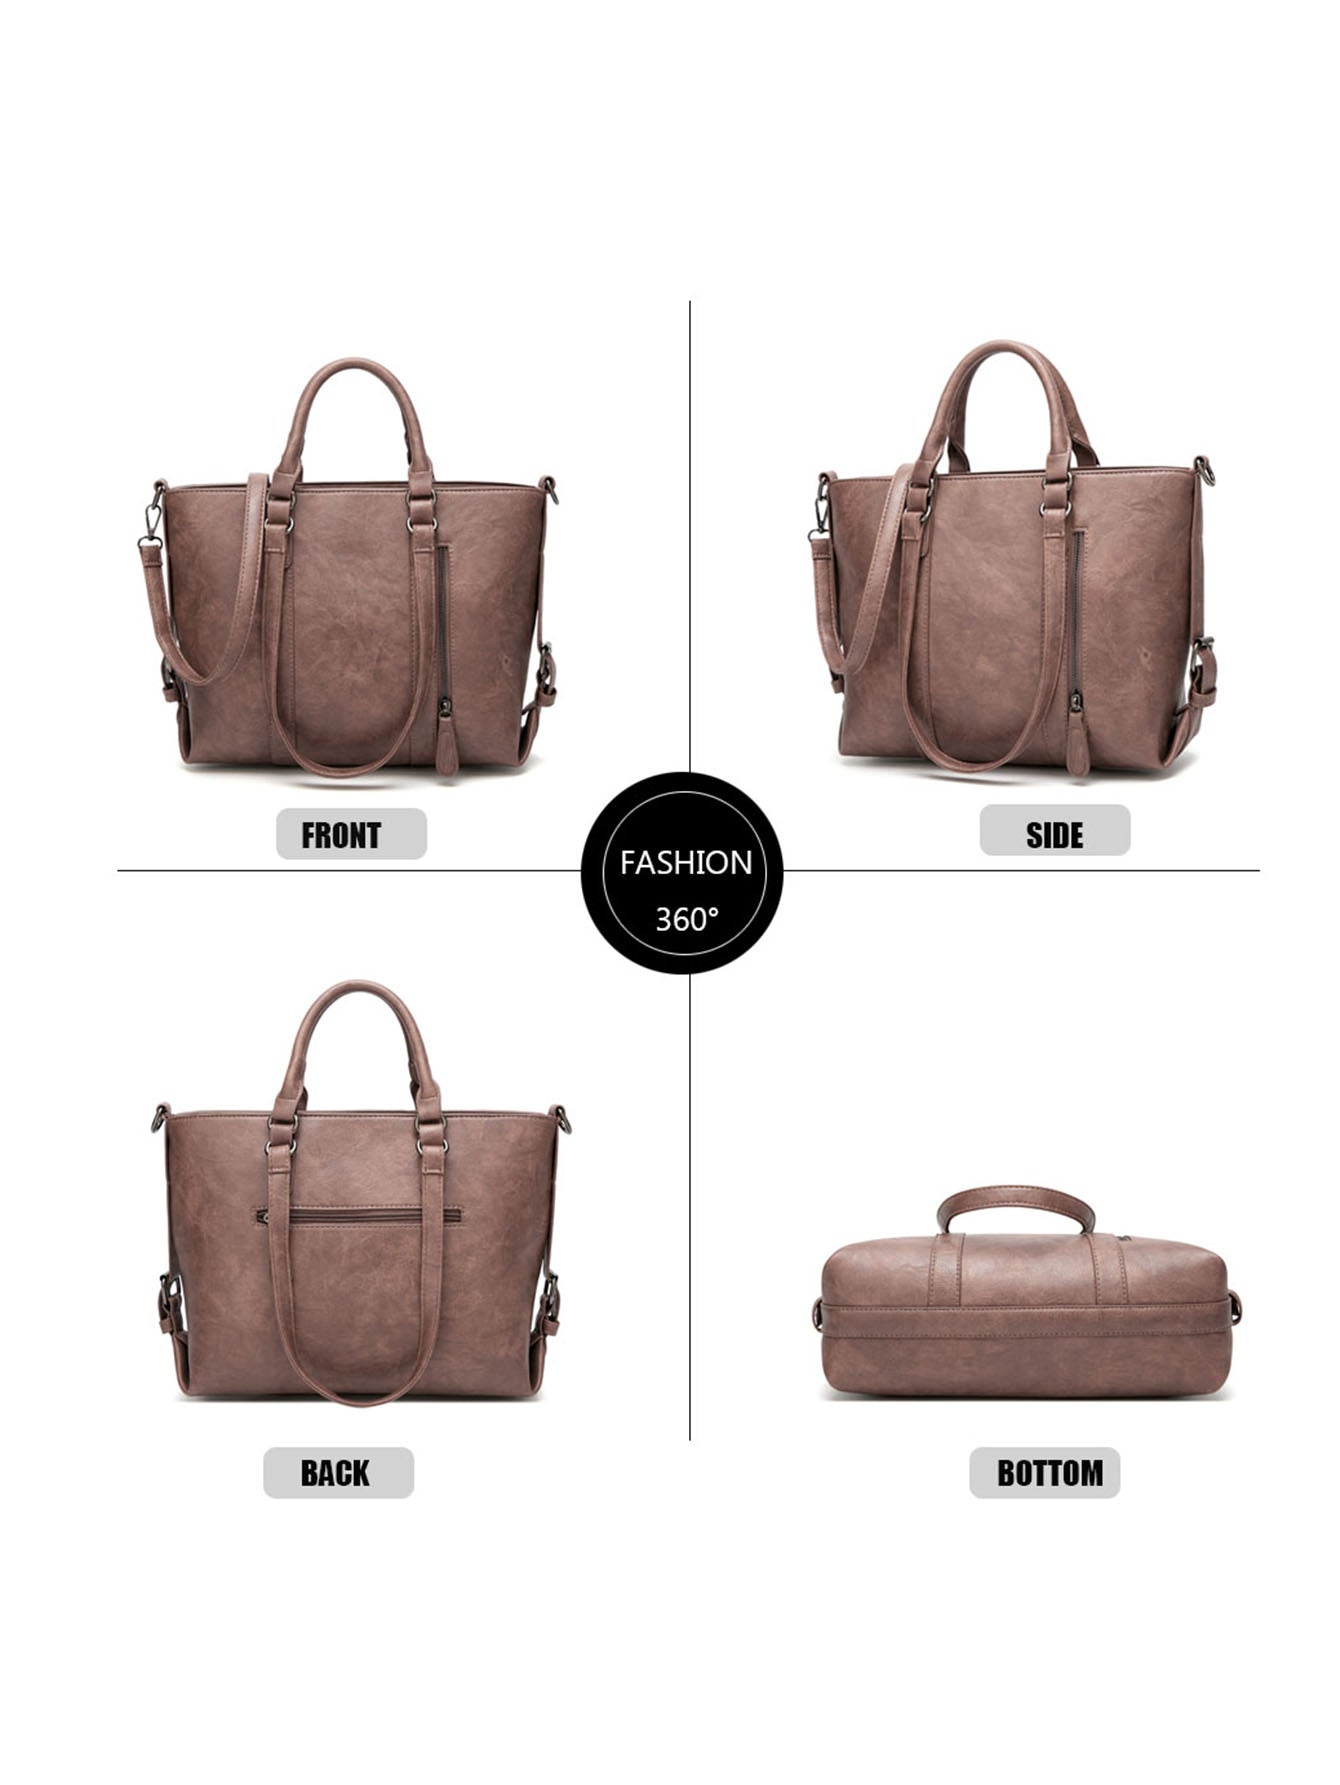 Women Tote Shoulder Bag Vintage Top Handle Bag Satchel Purse and Handbag-Medium Size Sai Feel